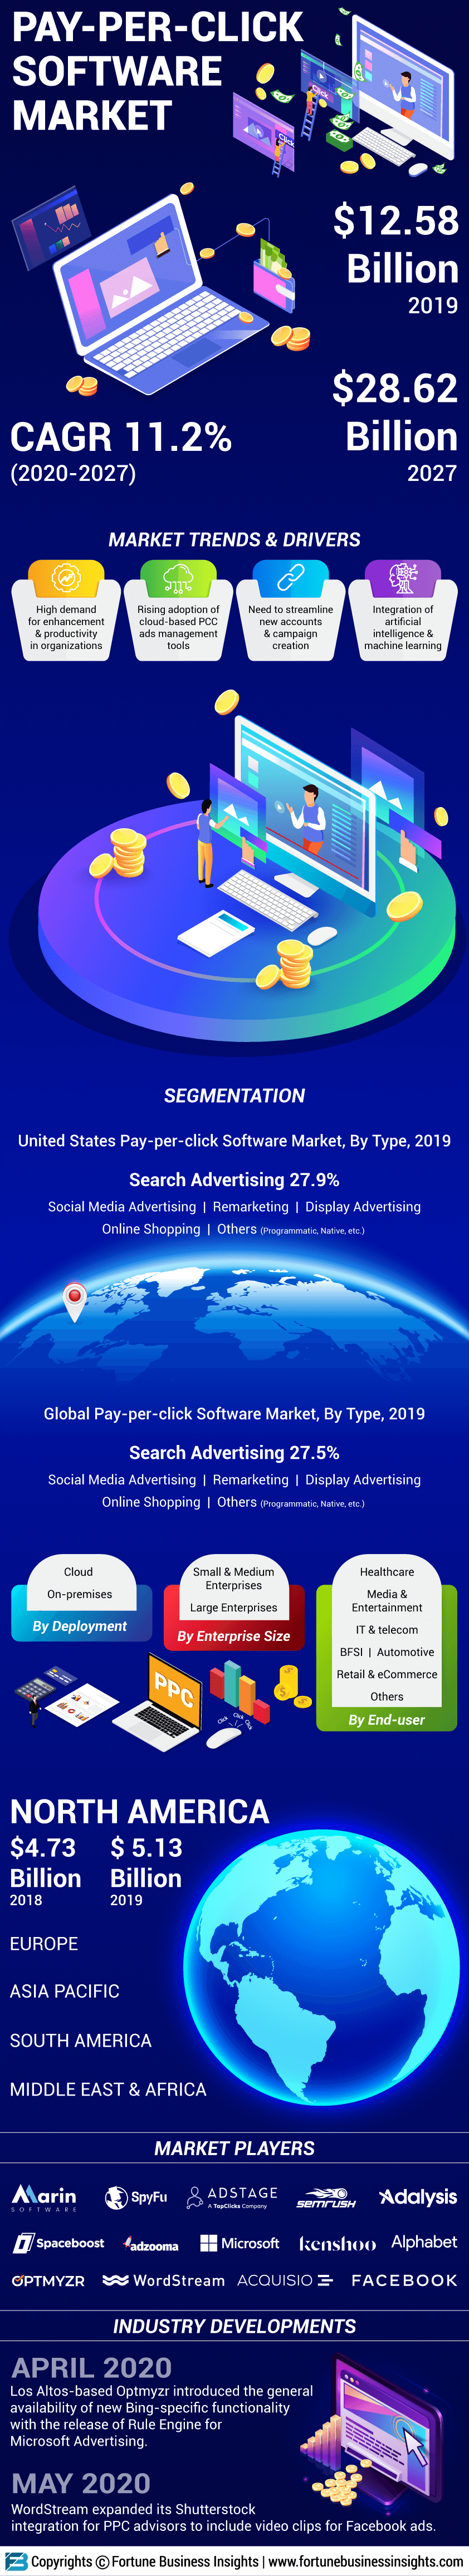 Pay-per-click (PPC) Software Market